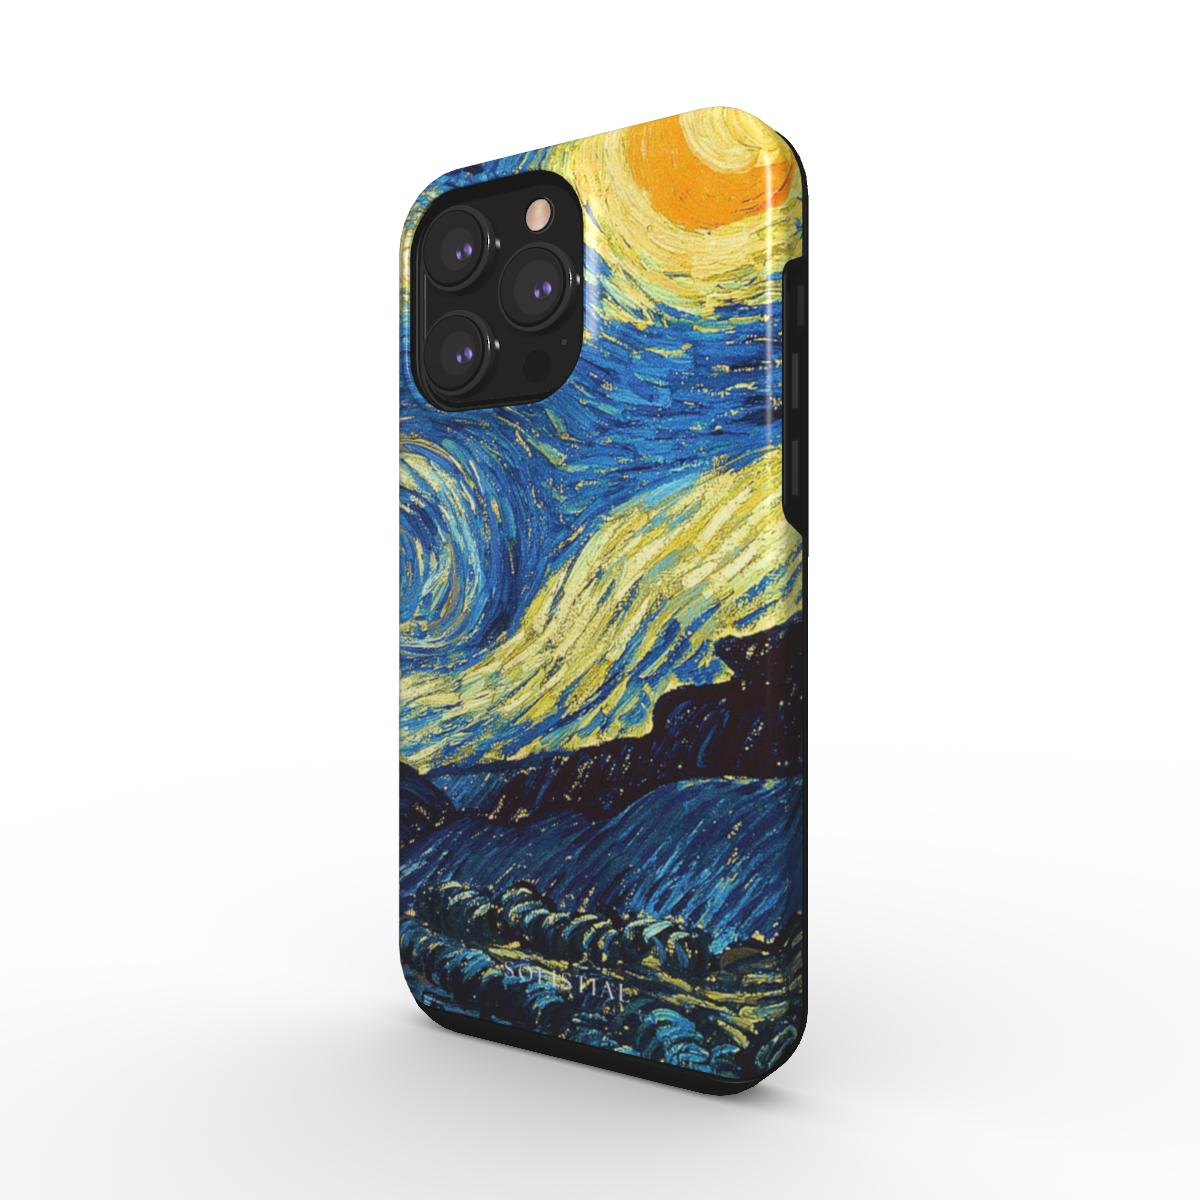 Starry Night Vol.1 by Van Gogh Tough Phone Case